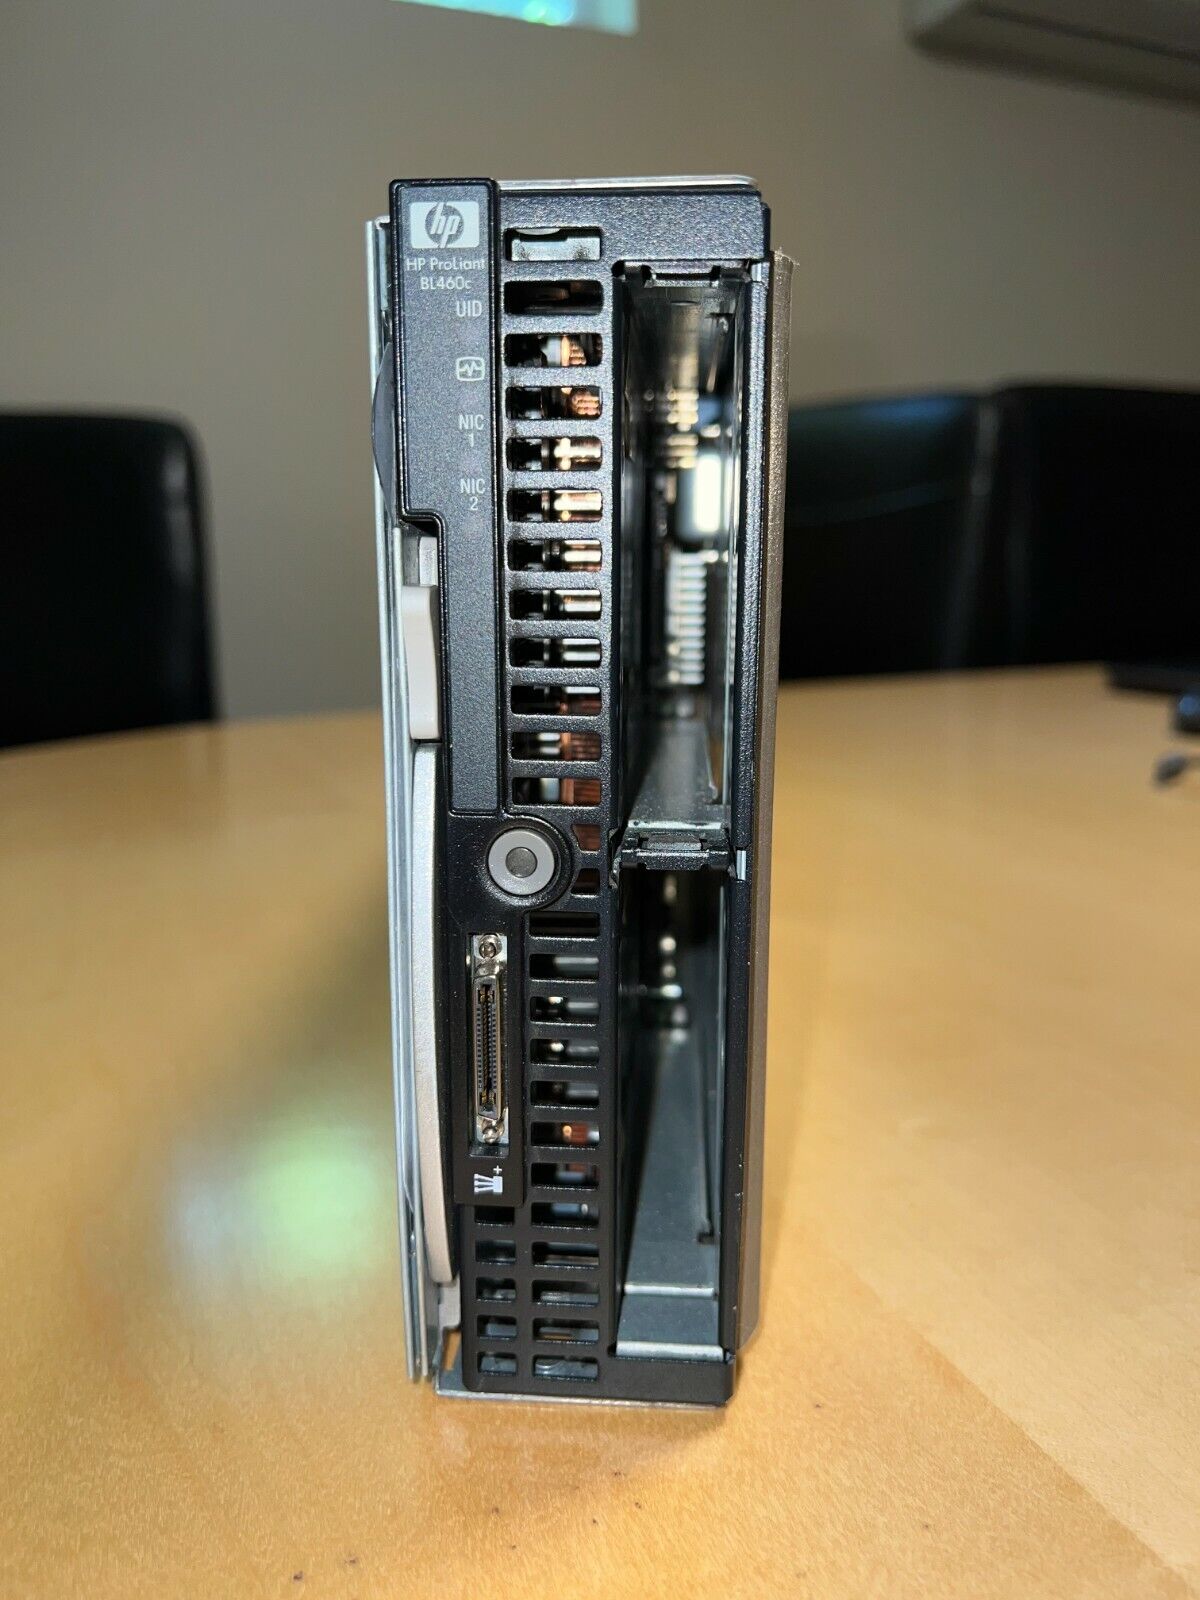 HP ProLiant BL460c G5 or G6 Blade Server 